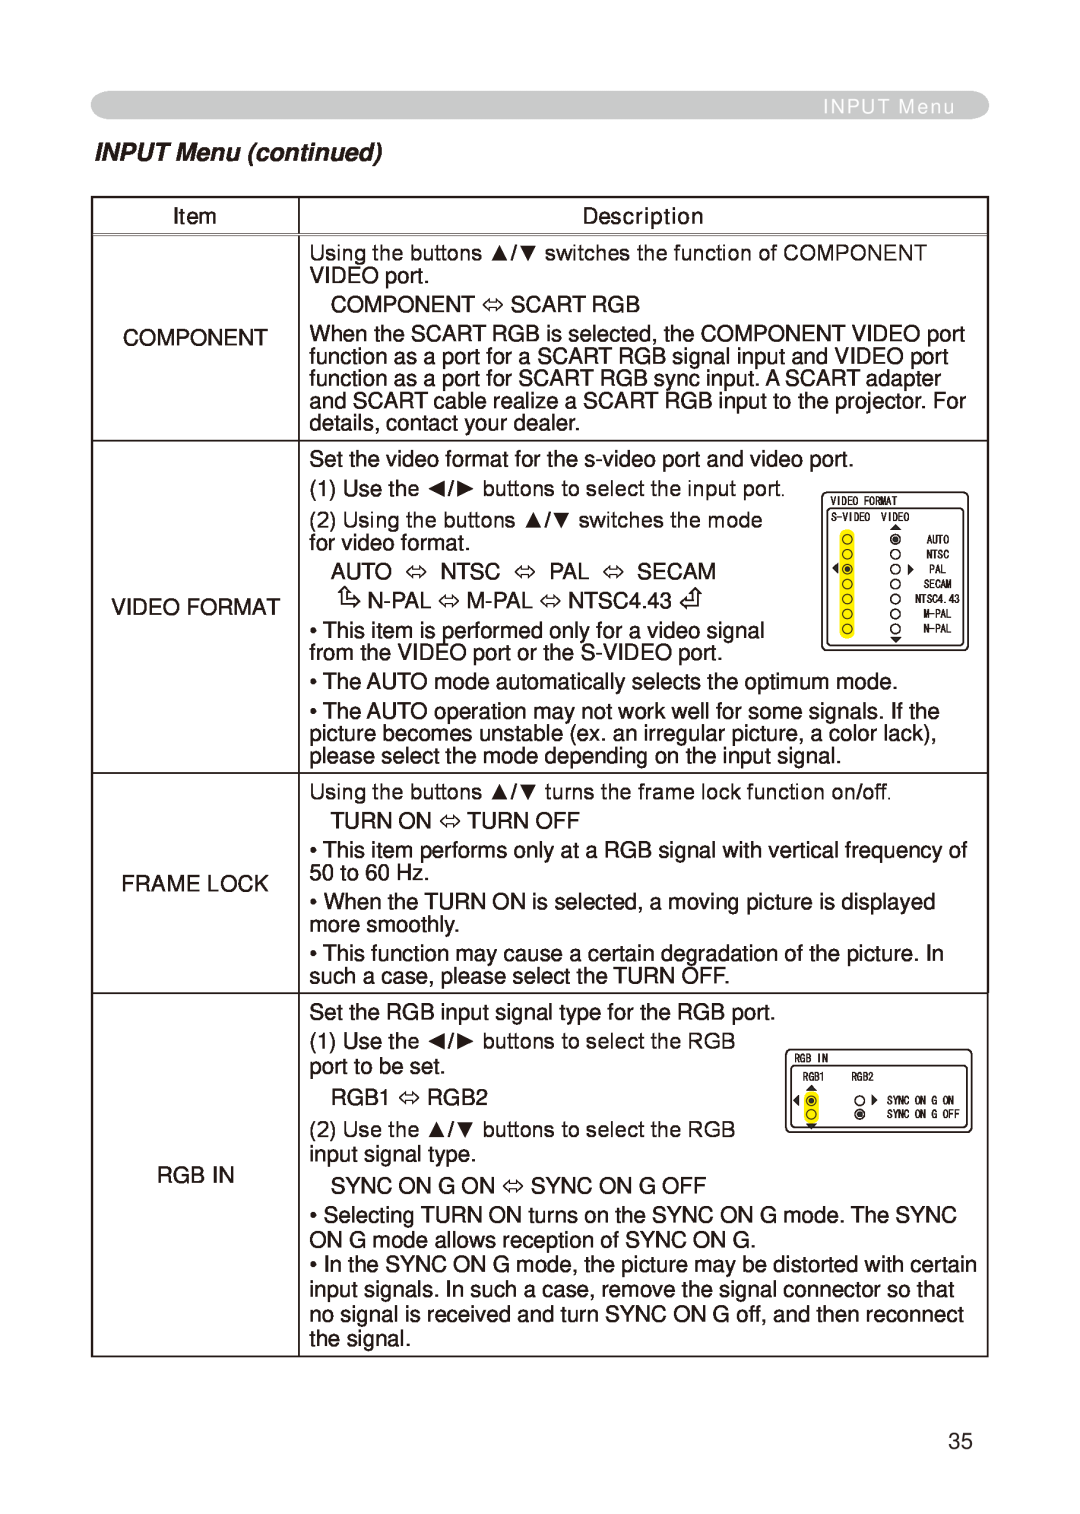 Hitachi CP-X268A user manual INPUT Menu continued, Description, Component, Video Format, Frame Lock, Rgb In 